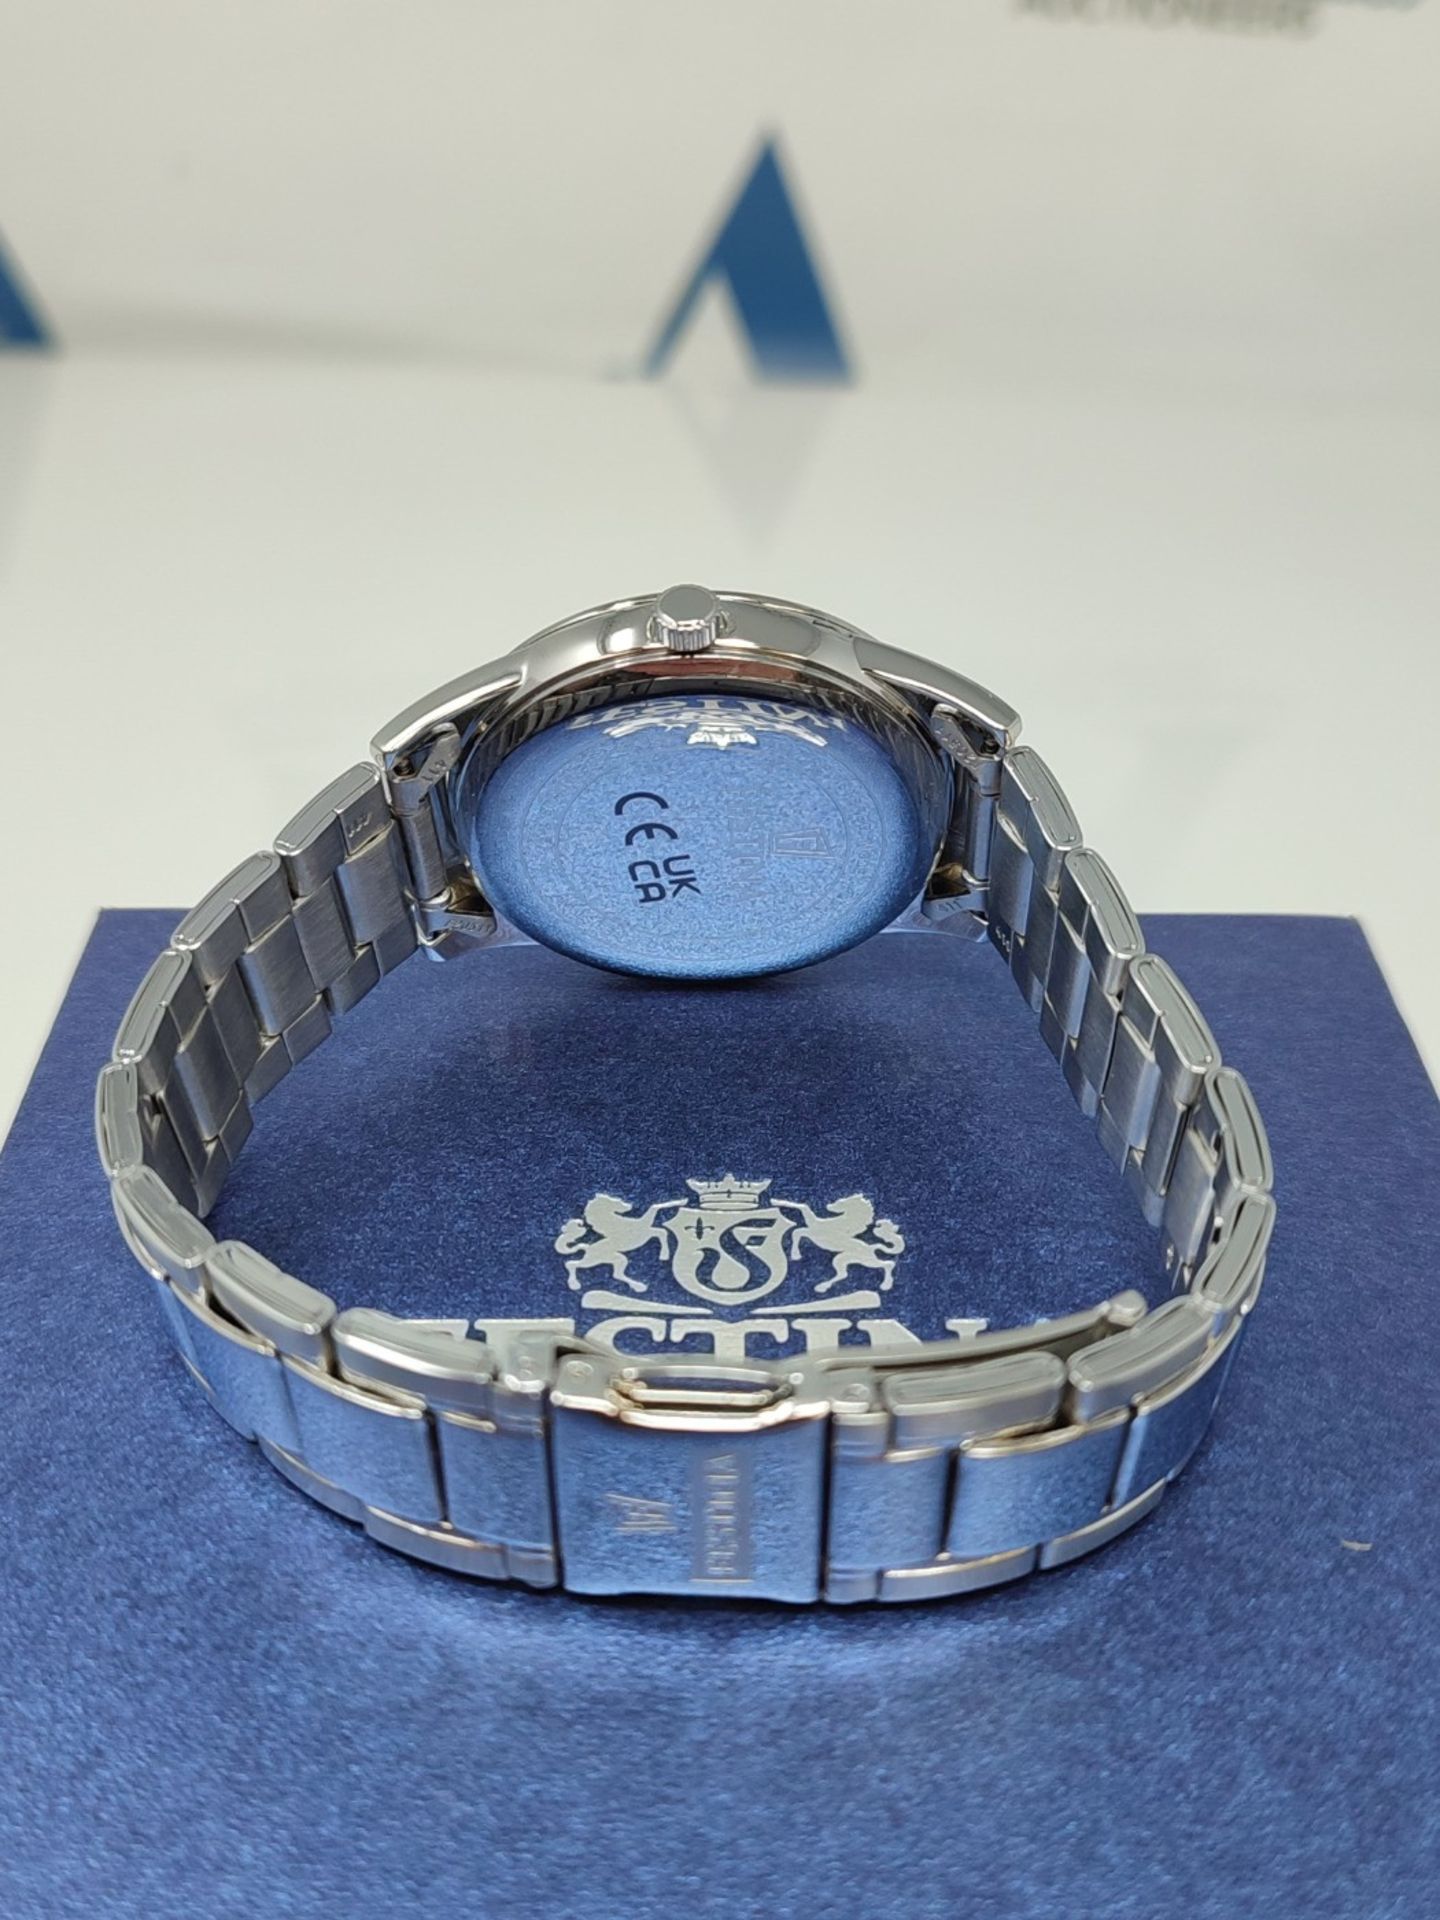 RRP £71.00 Festina Men's Analog-Digital Quartz Watch with Stainless Steel Bracelet - Image 3 of 6